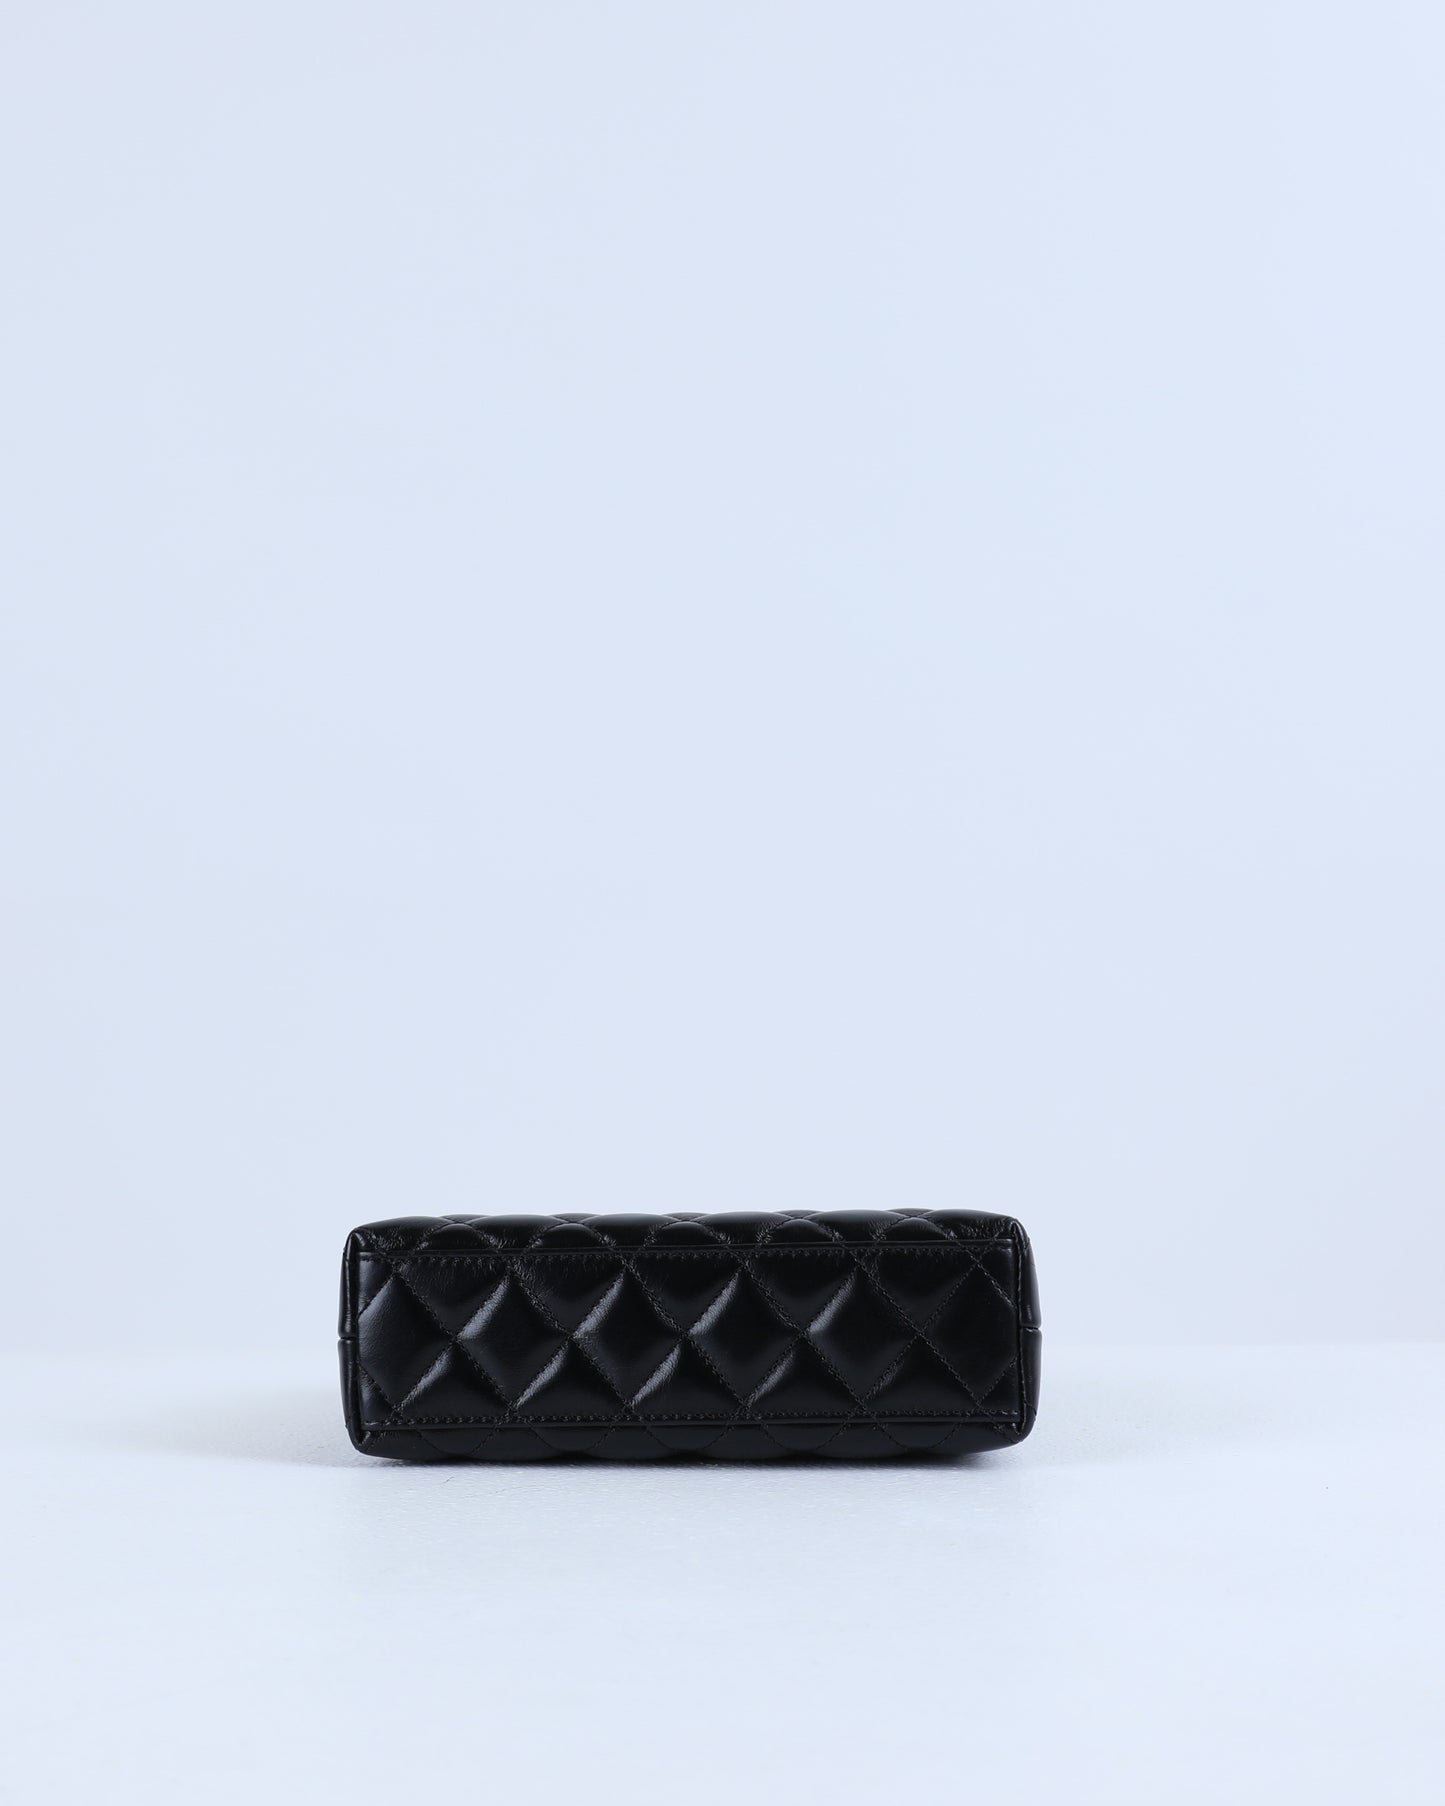 Chanel Kelly Bag Shiny Aged Calfskin & Gold-Tone Metal in Black Medium size